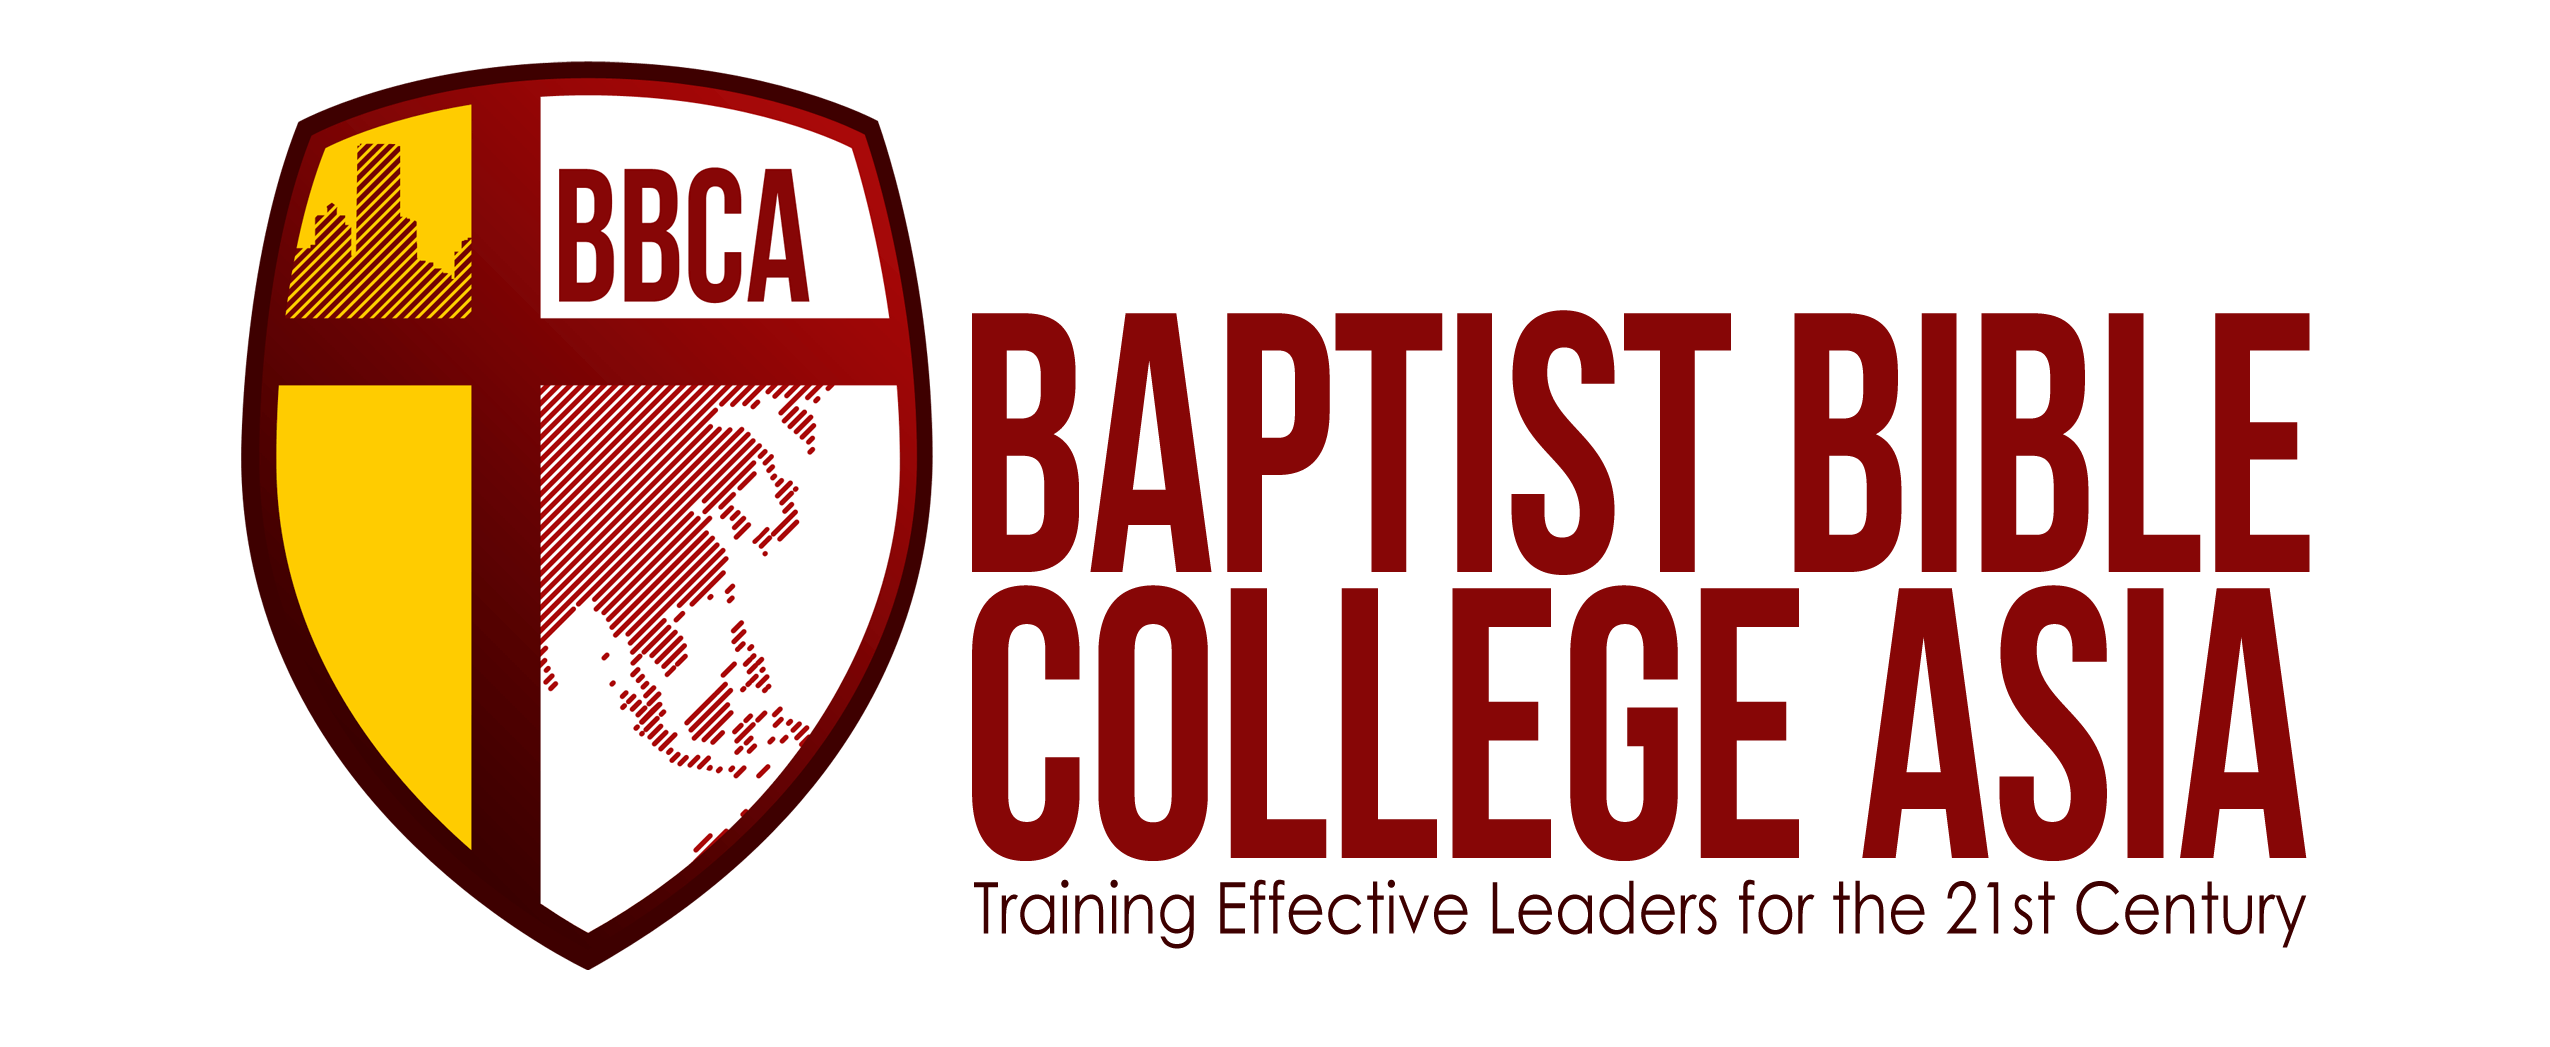 BBCA Logo - Baptist Bible College Asia | Welcome